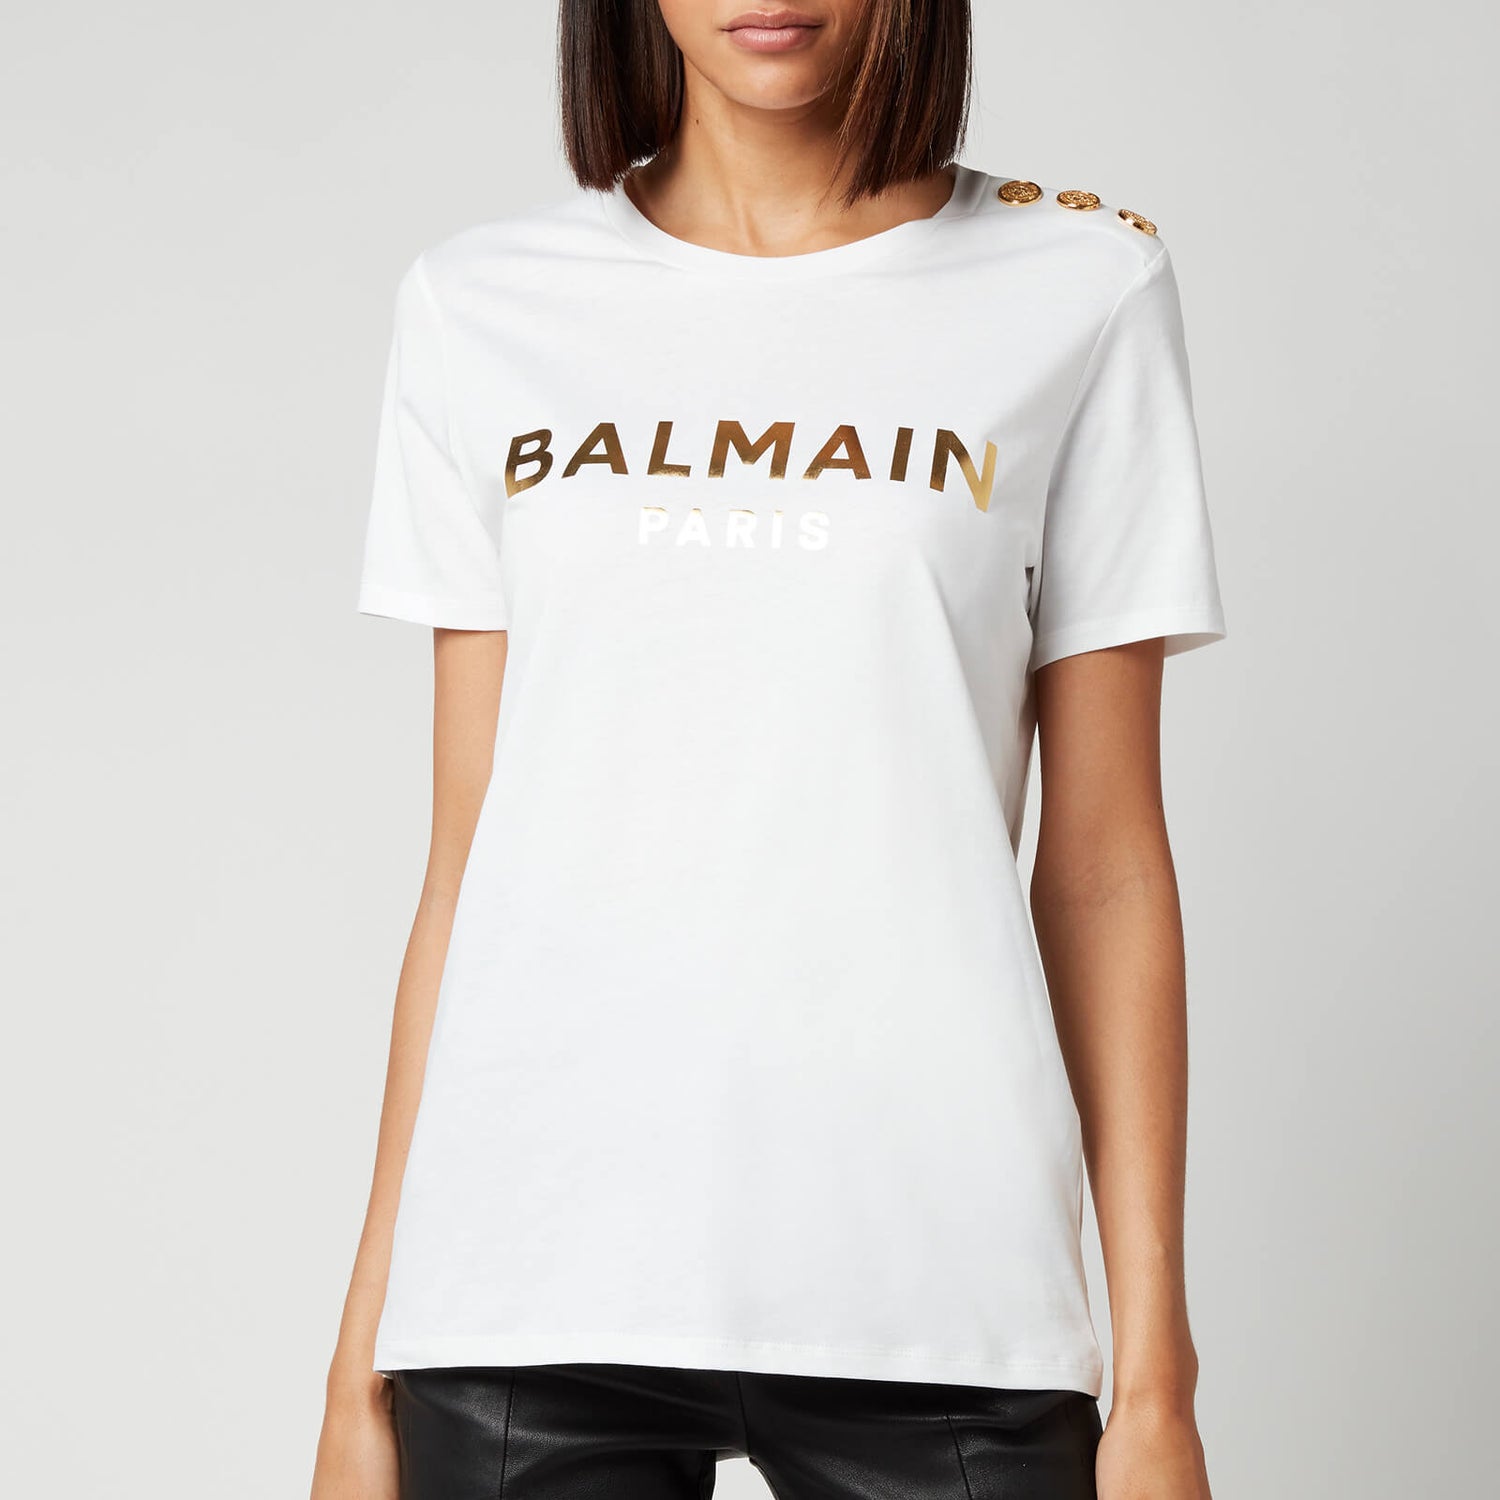 Balmain Women's Short Sleeve 3 Button Metallic Logo T-Shirt - Blanc/Or ...